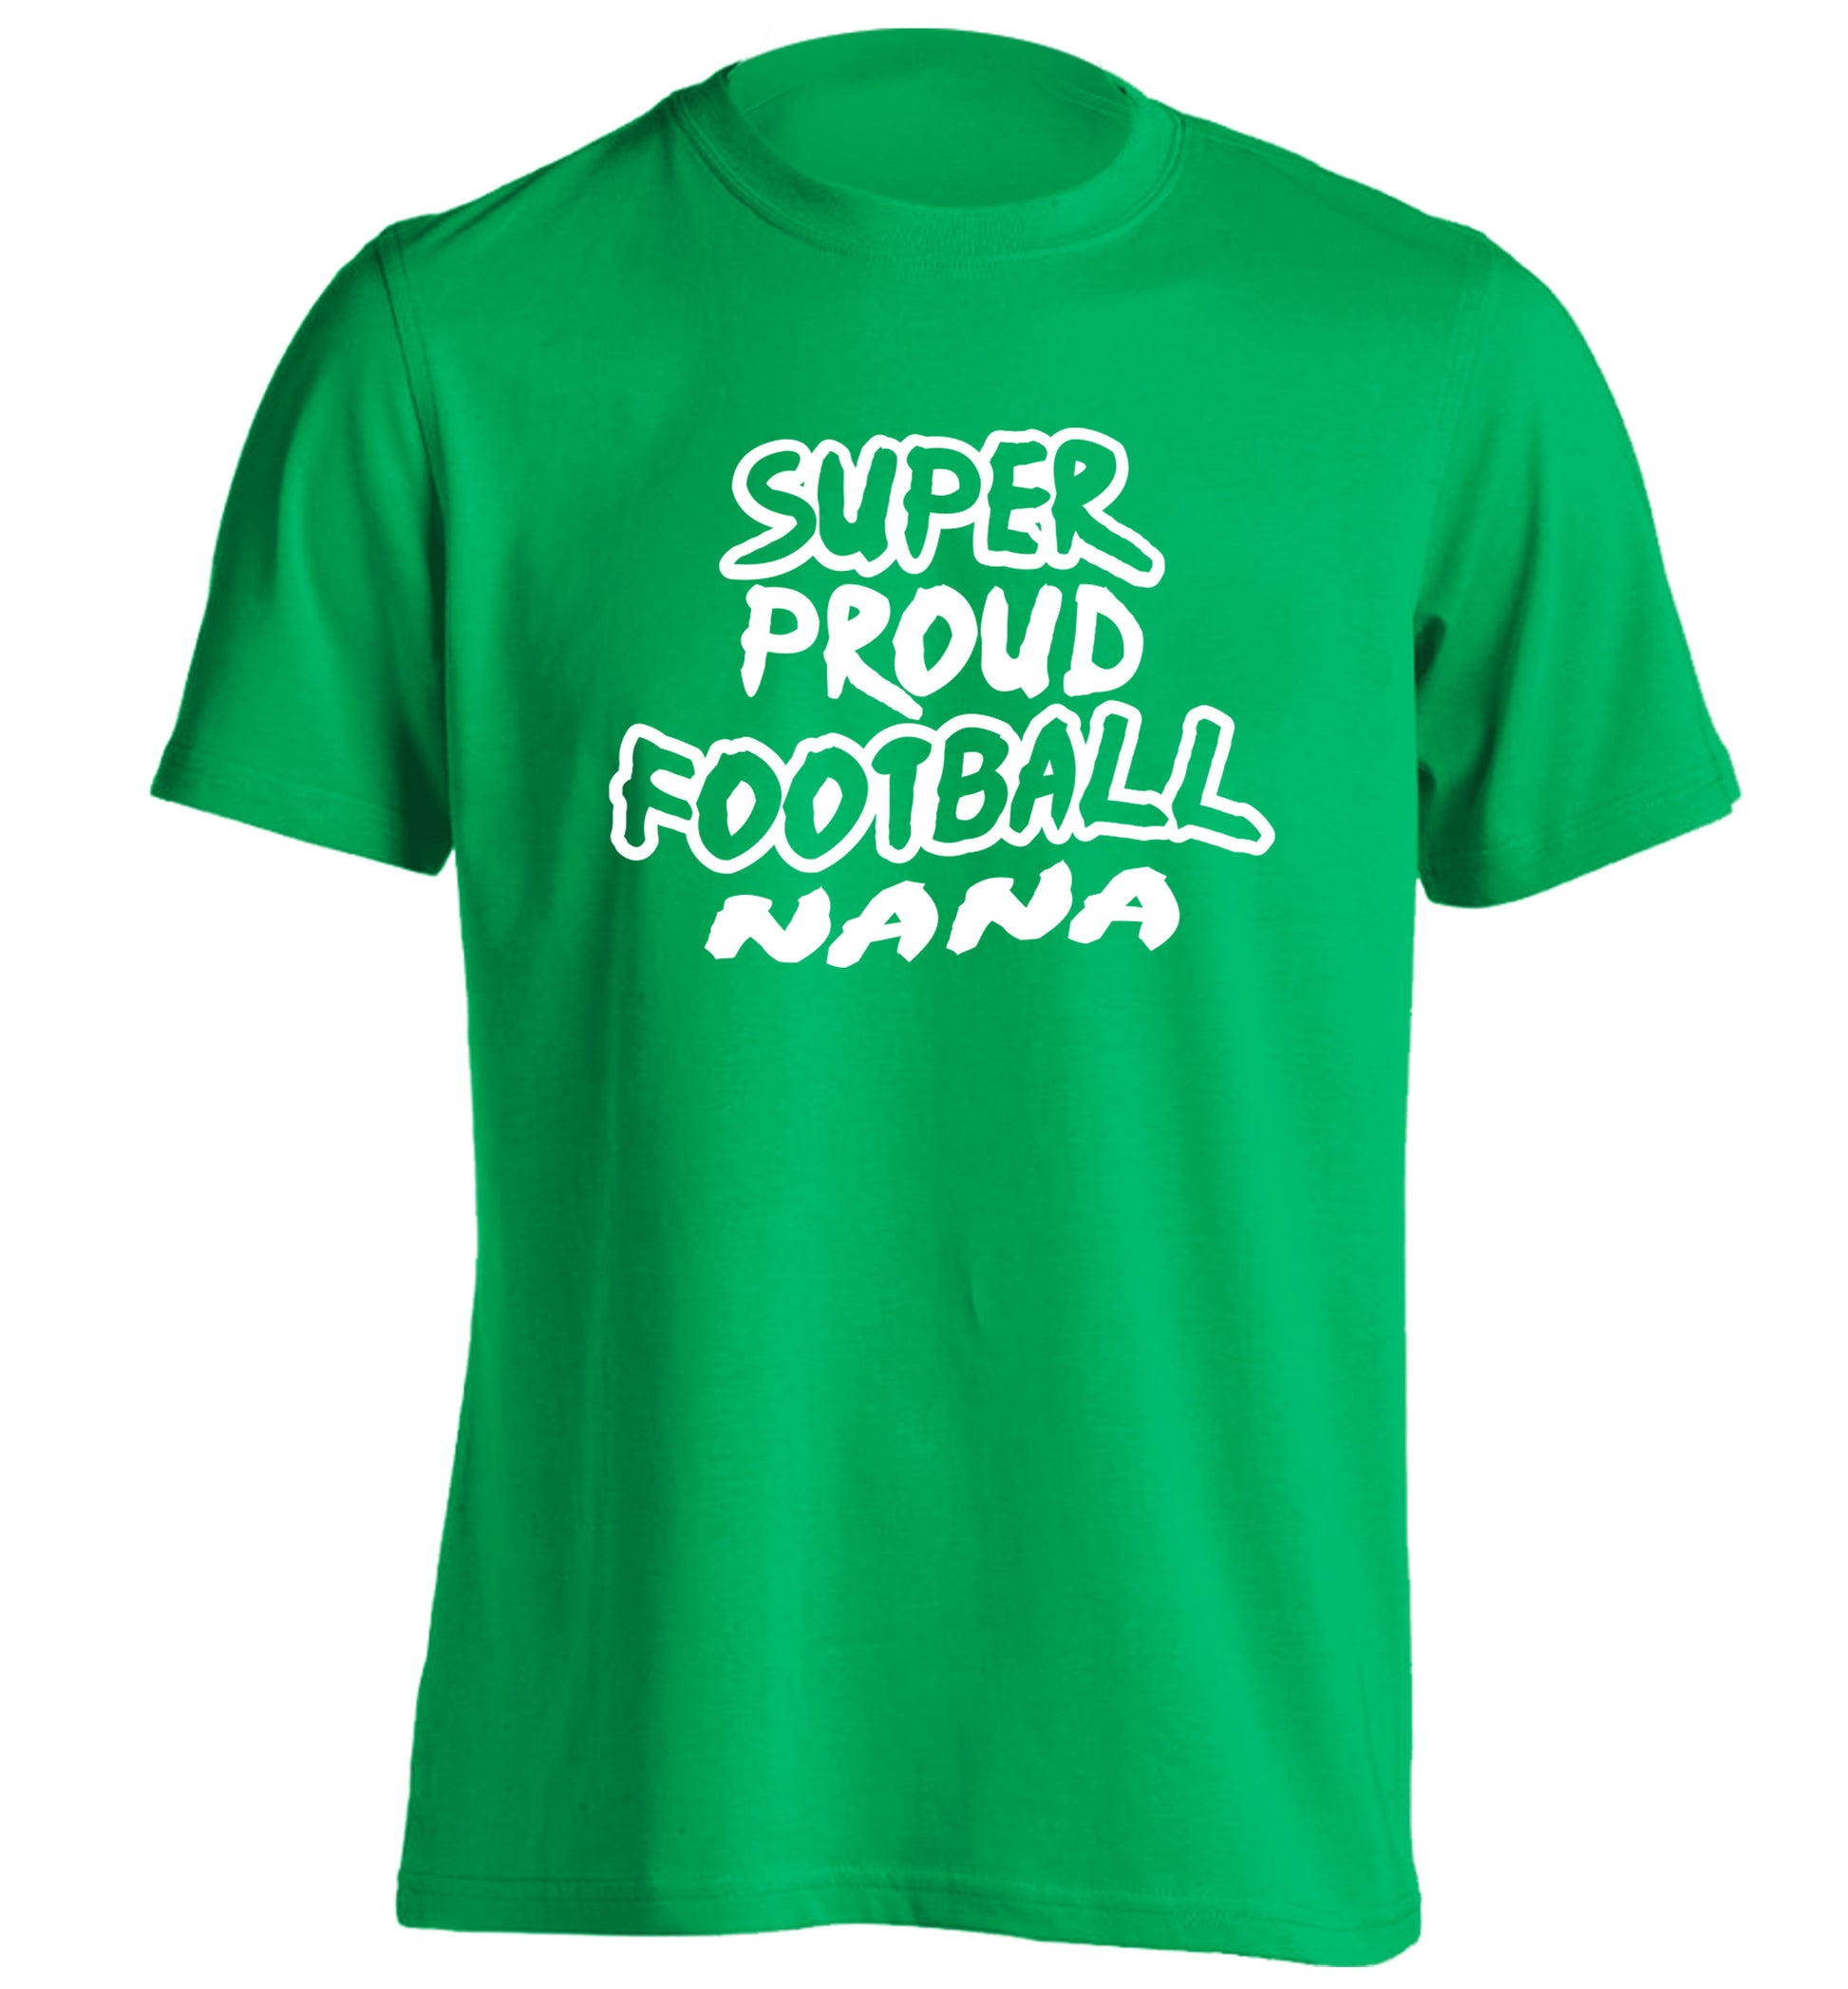 Super proud football nana adults unisexgreen Tshirt 2XL